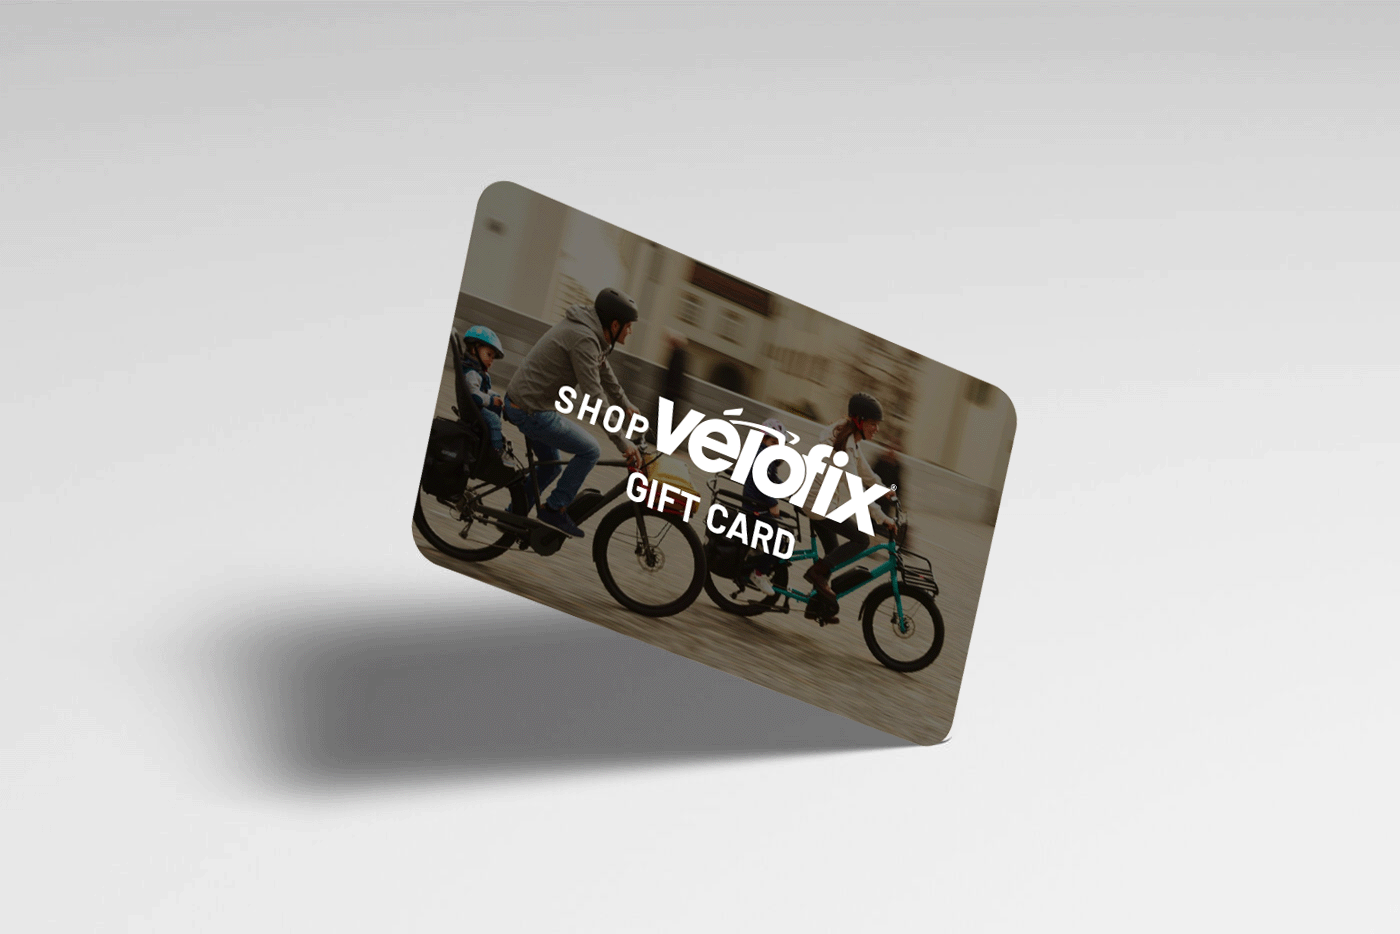 Shop velofix Gift Card